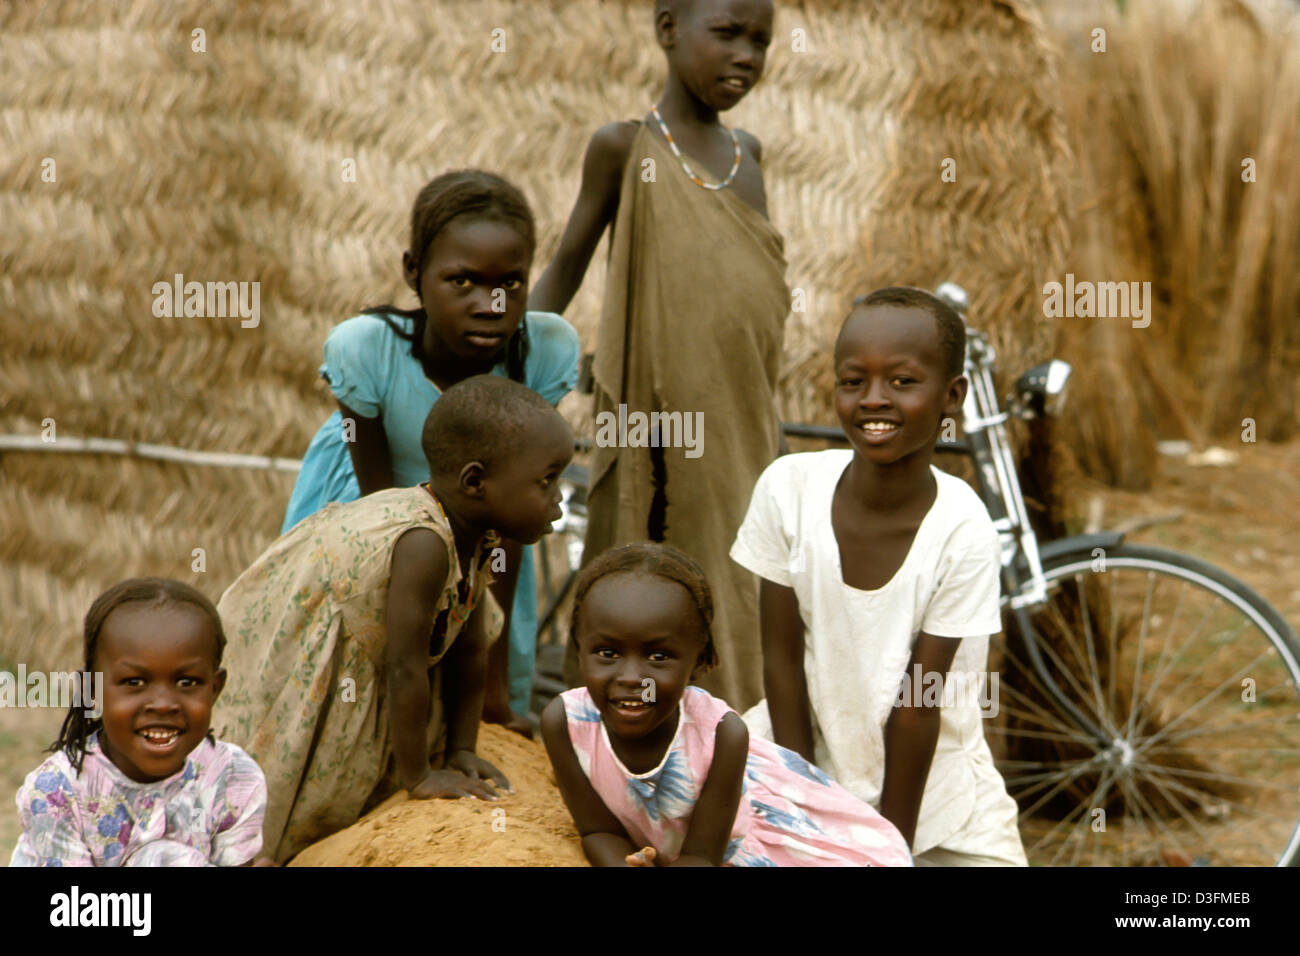 Smiling children in Malakal, South Sudan. Stock Photo